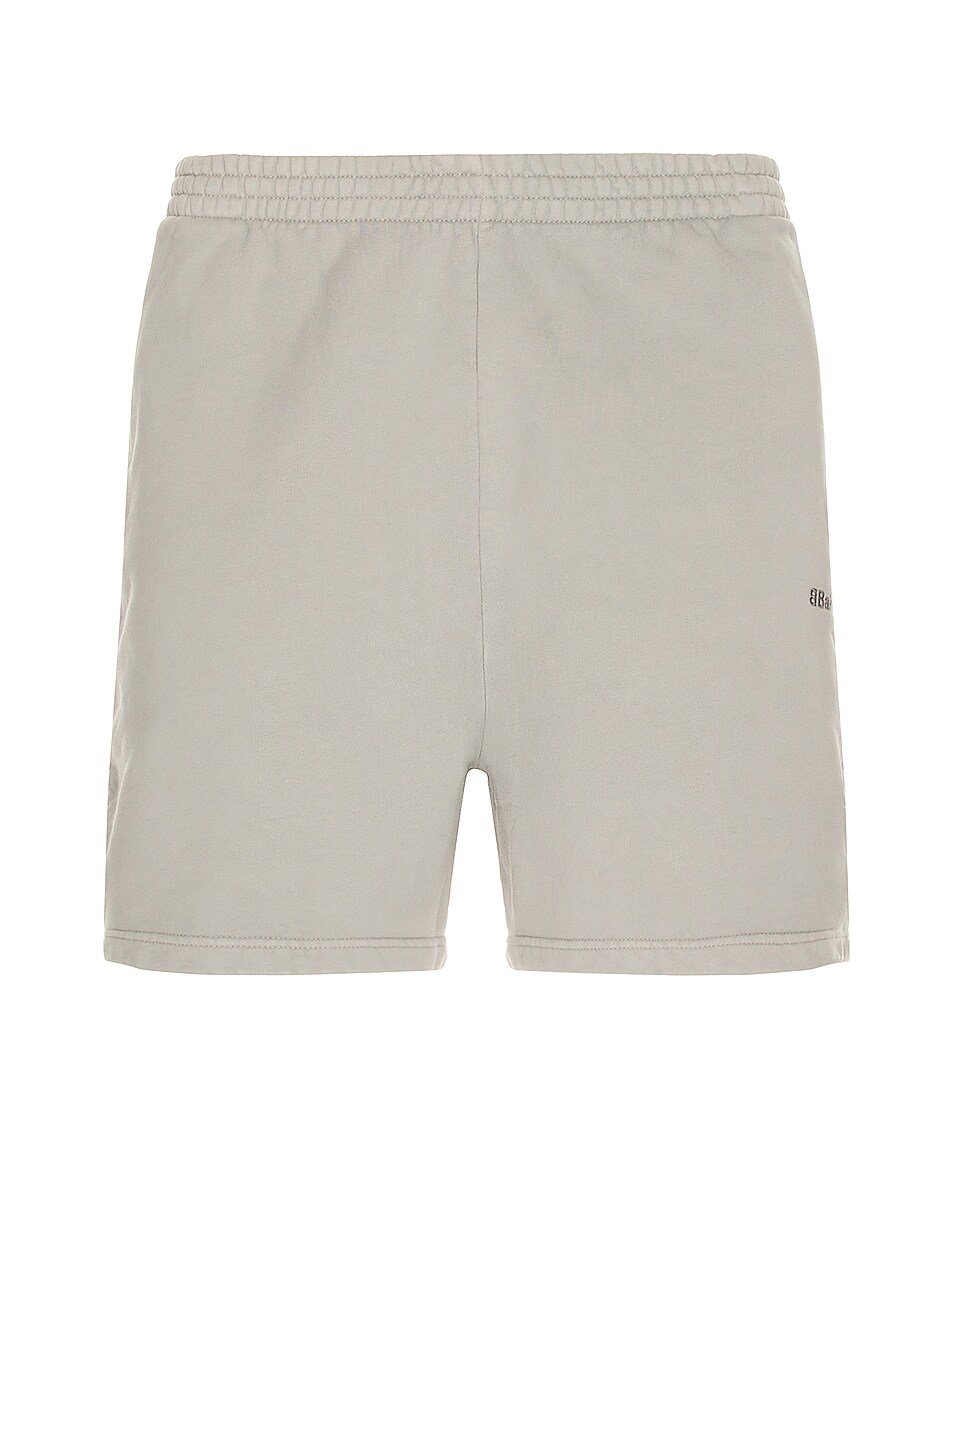 Image 1 of Balenciaga Sweat Shorts in Smoke Grey, White & Red